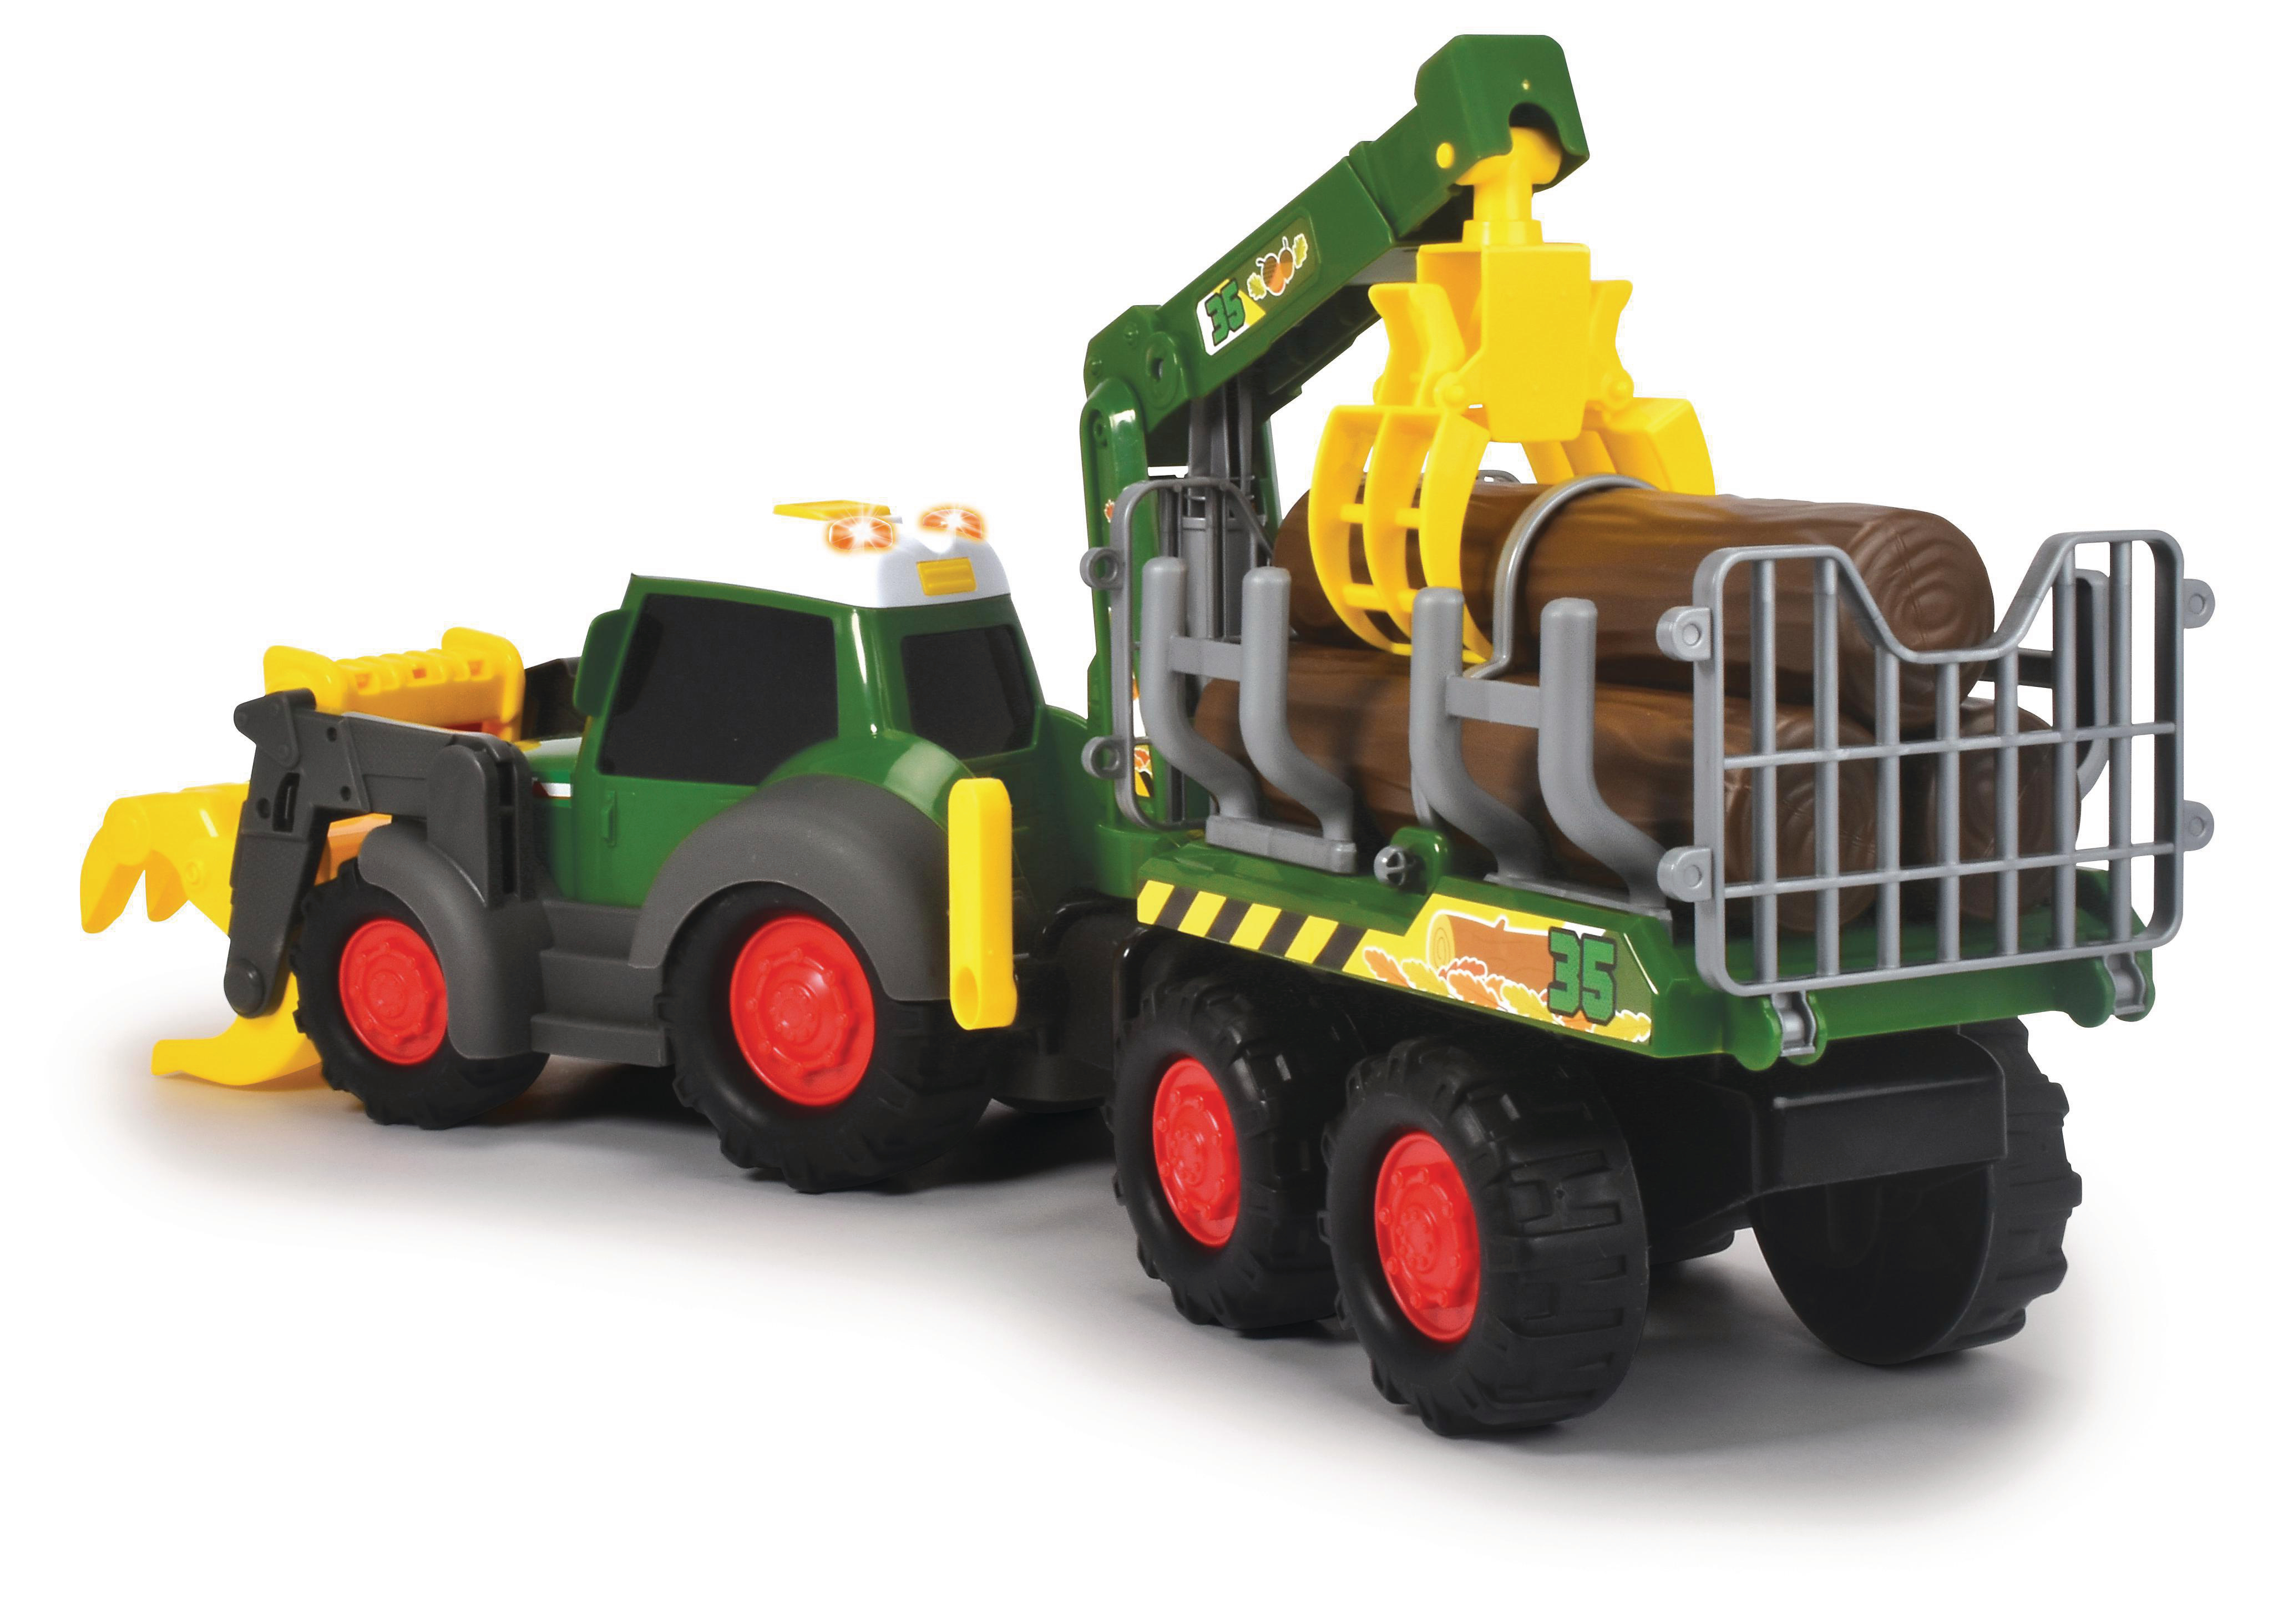 Fendti Anhänger Forester, Grün ABC mit Spielzeugauto DICKIE-TOYS Traktor